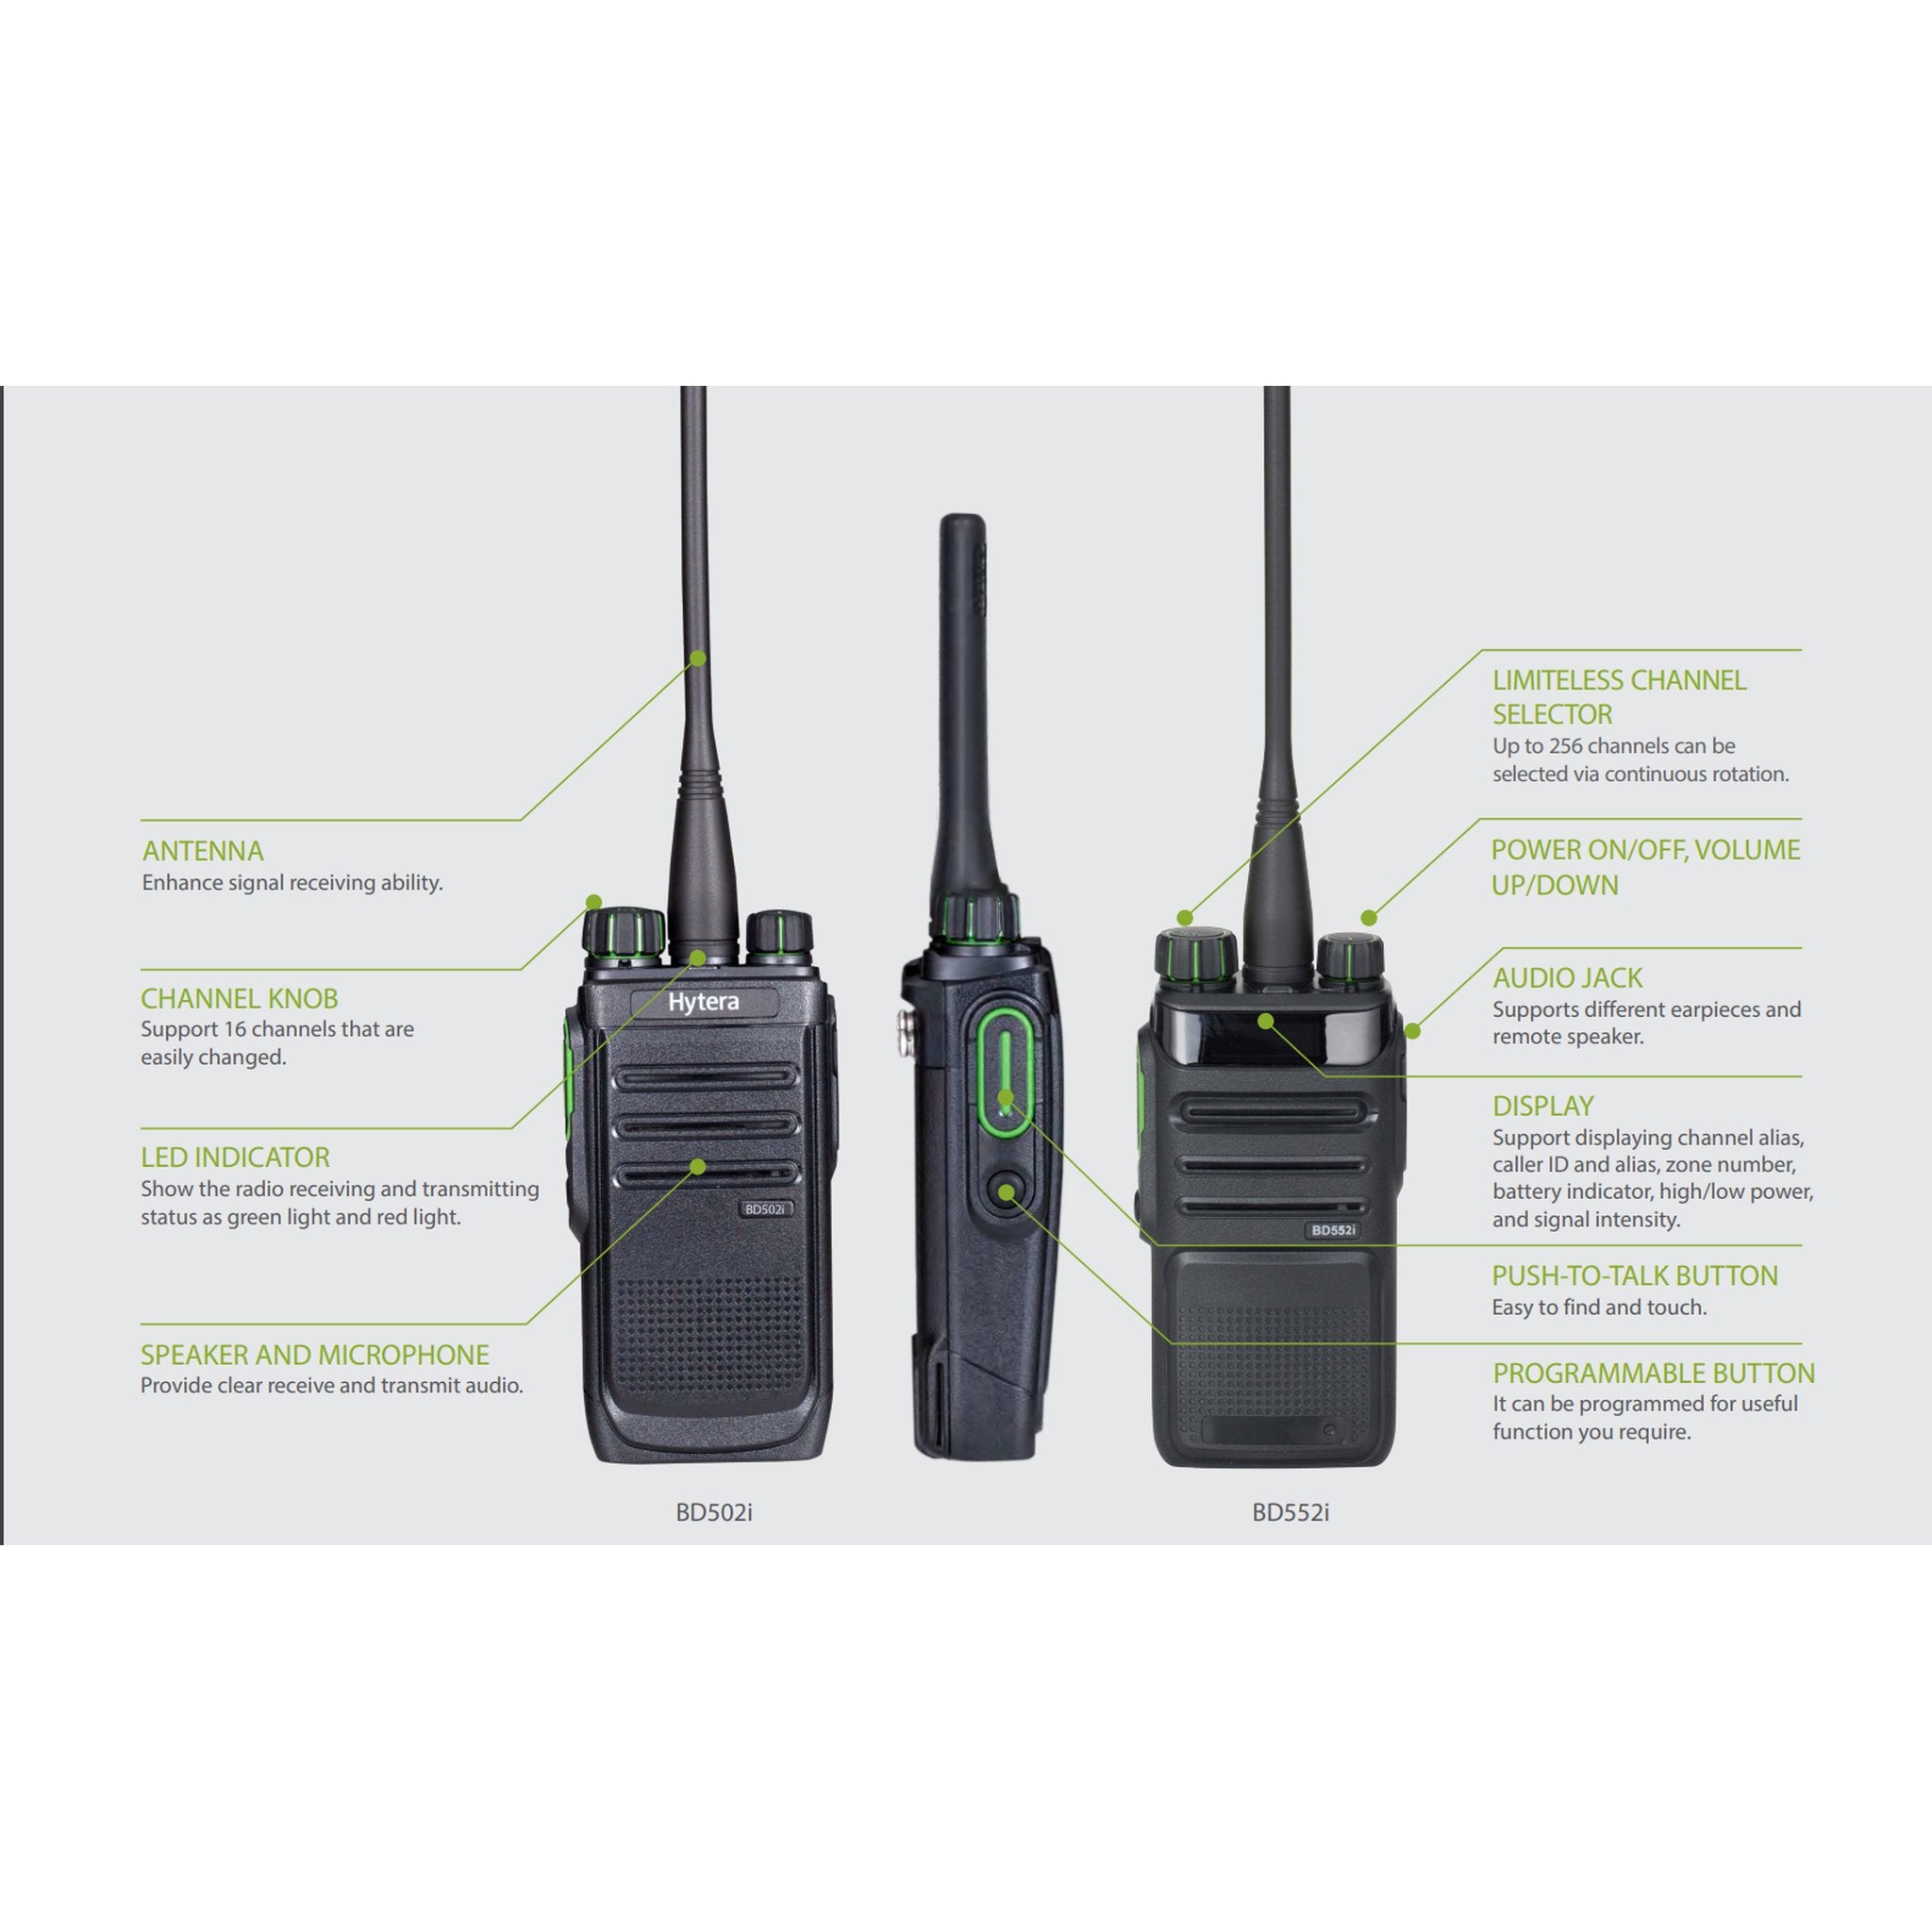 BD502i or BD552i Hytera Portable Two-Way Radios - Digital (DMR) - Atlantic Radio Communications Corp.